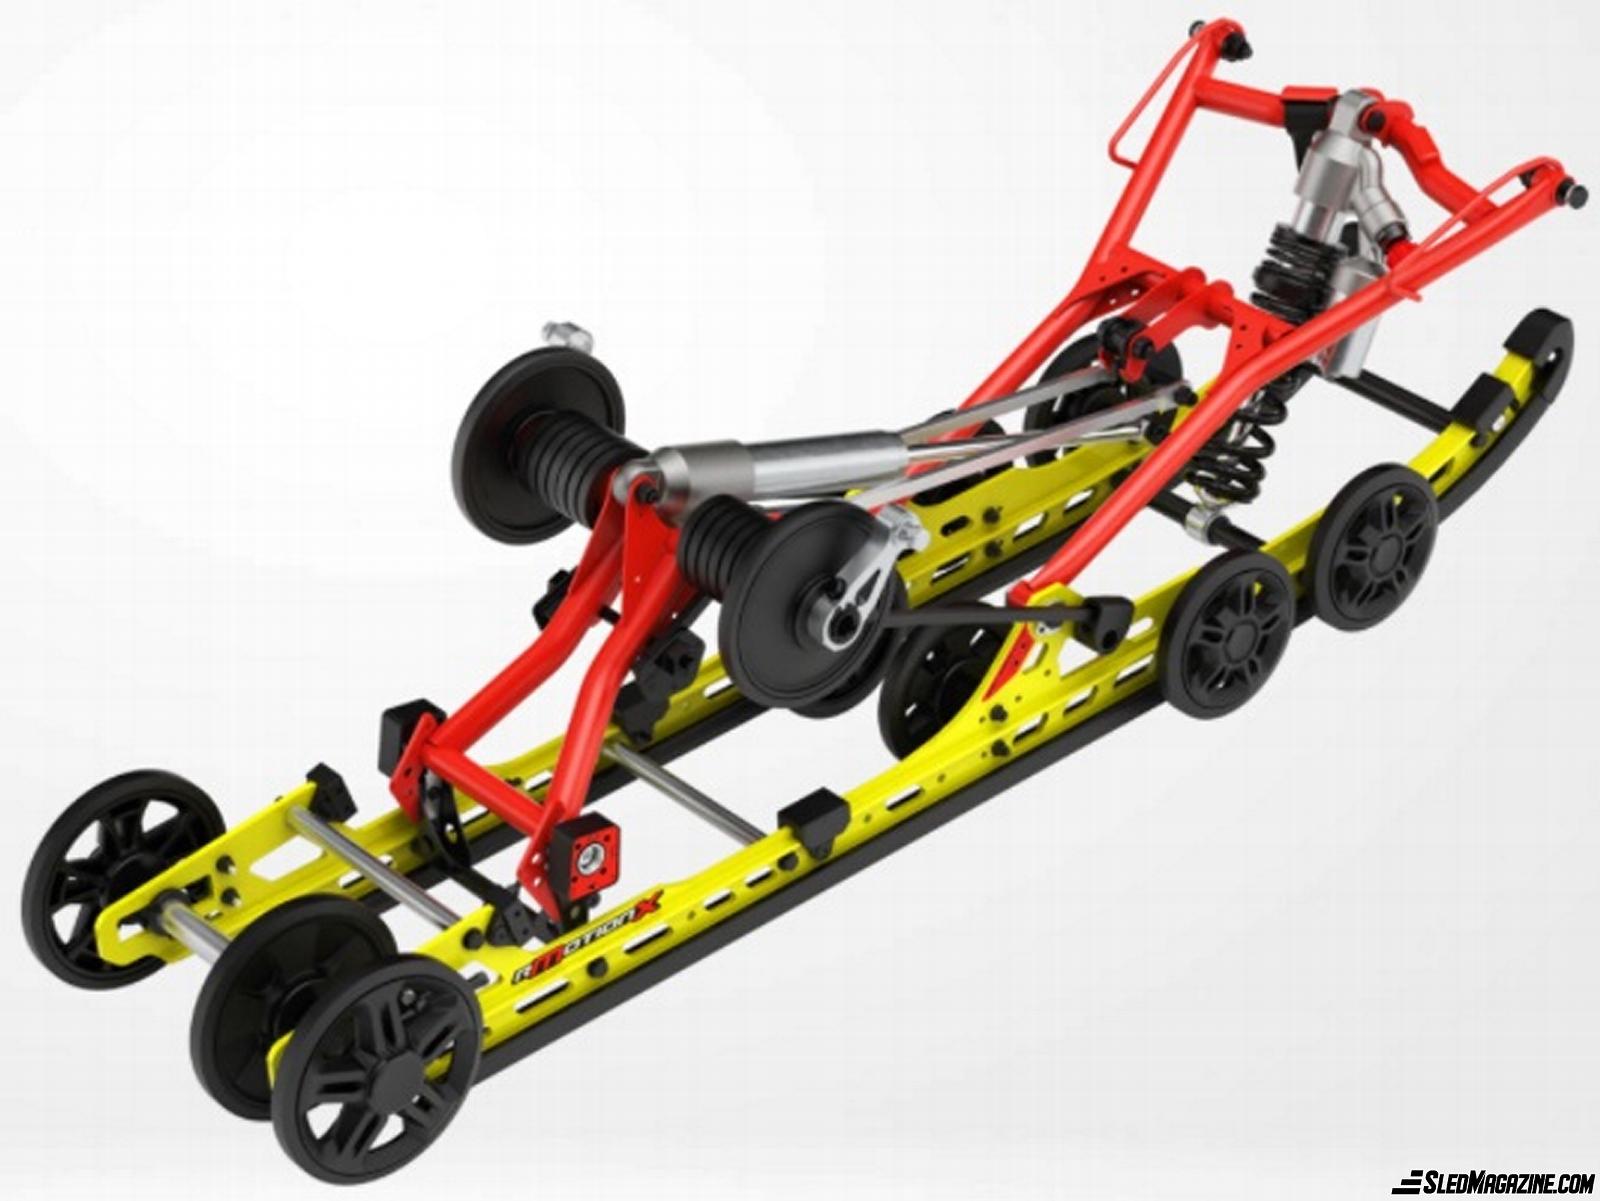 Snowmobile review Ski-Doo Renegade X 850 2021